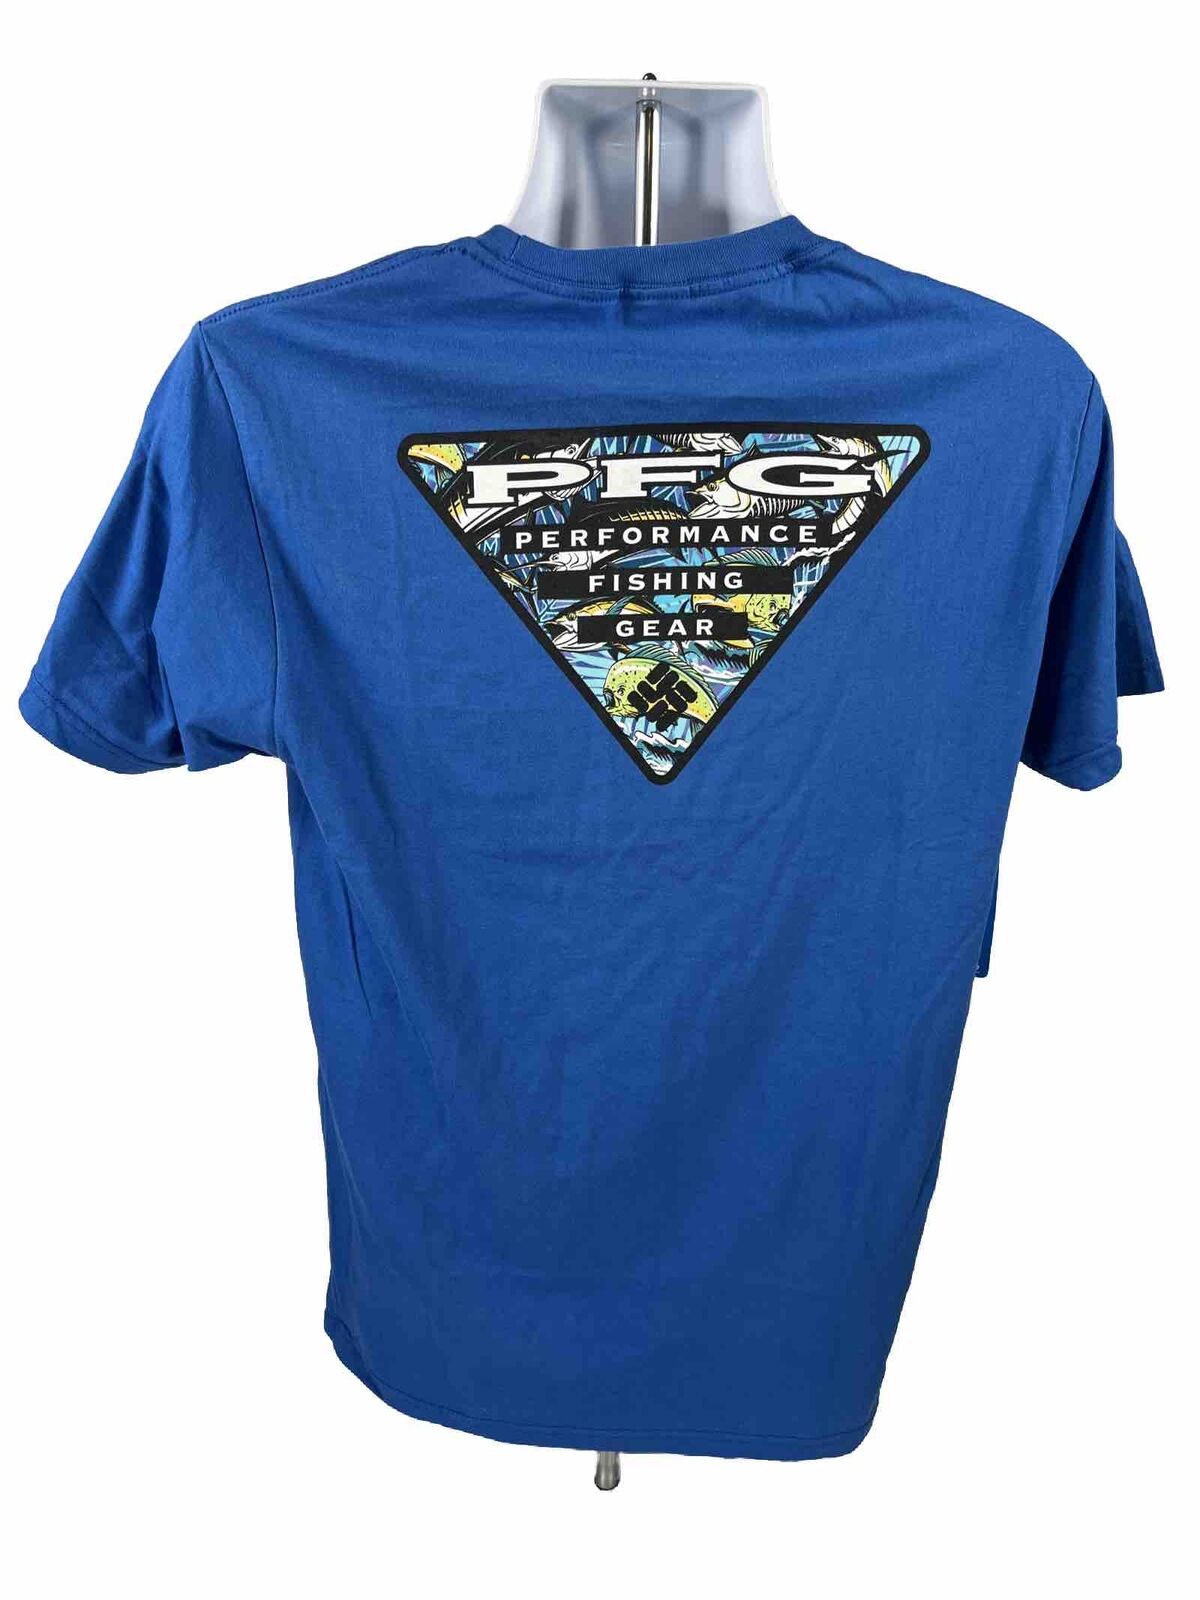 NEW Columbia Men's Blue PFG Cotton Graphic Back T-Shirt - M